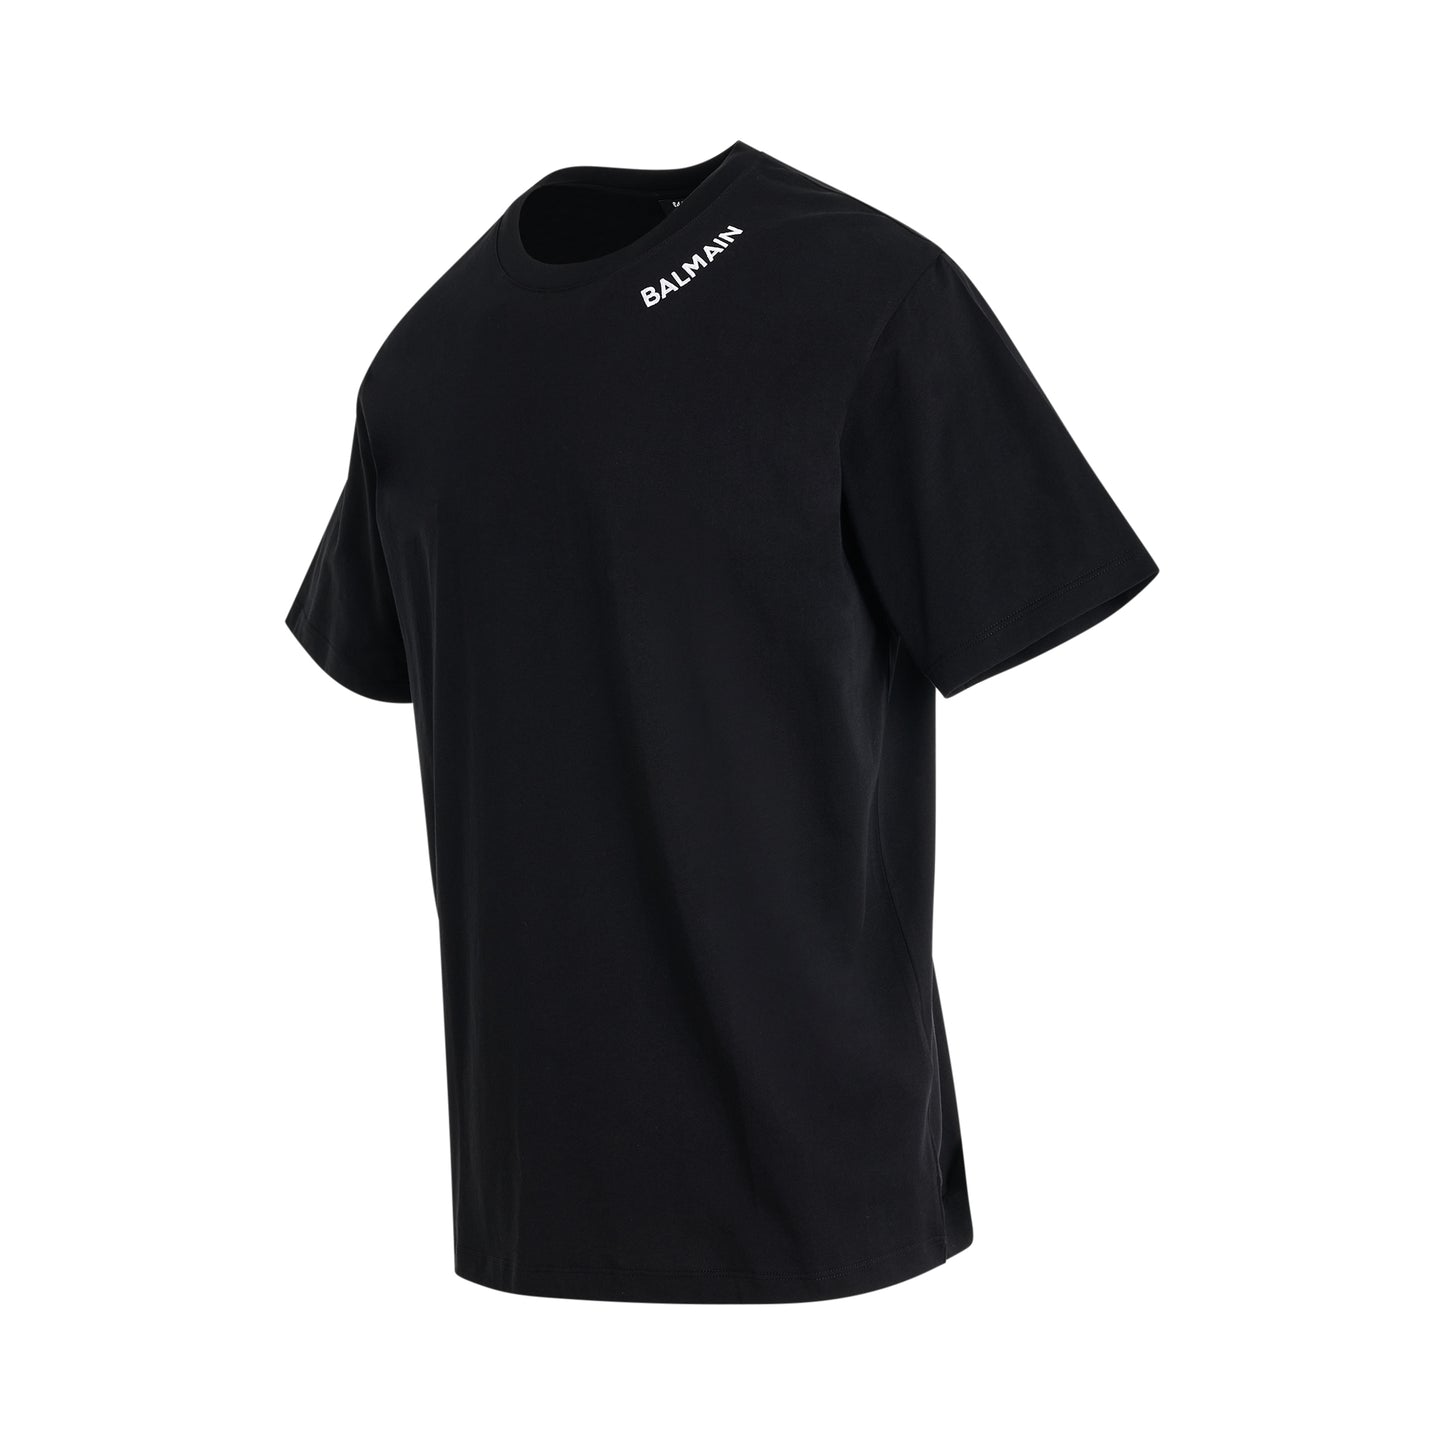 Balmain Stitch Collar T-Shirt in Black/White